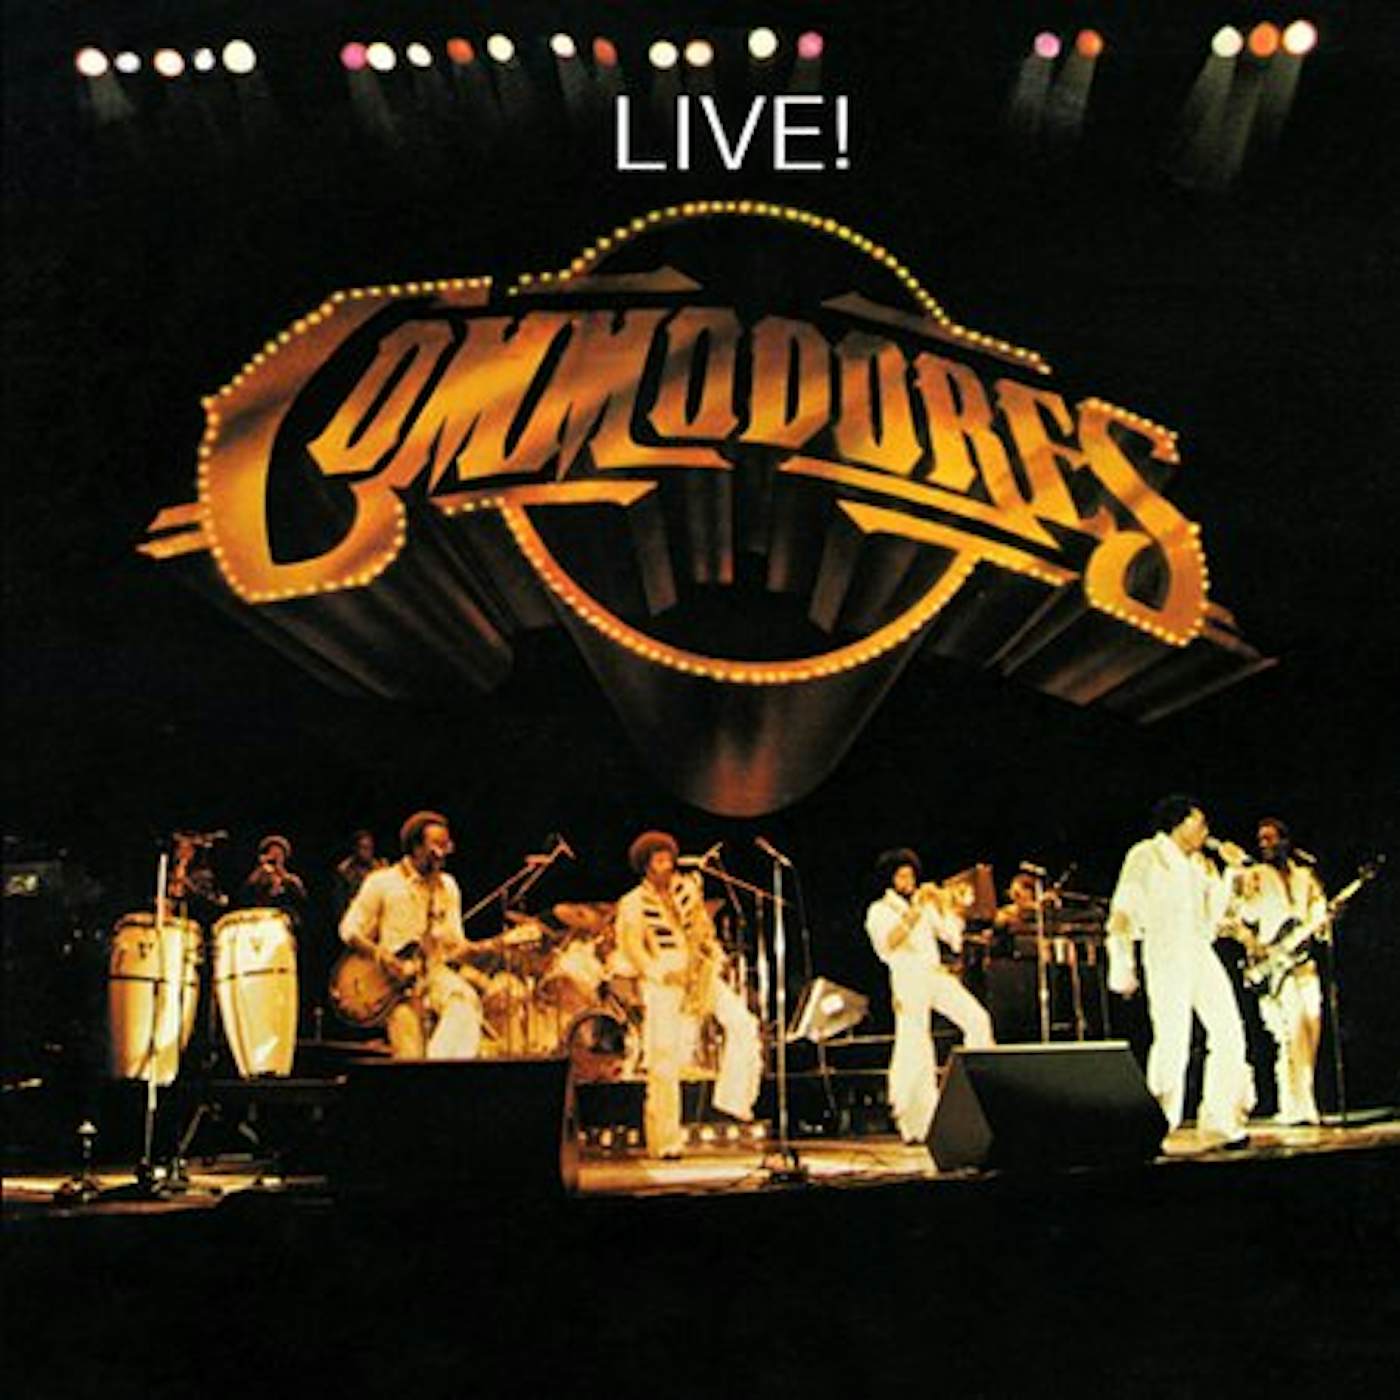 Commodores LIVE CD